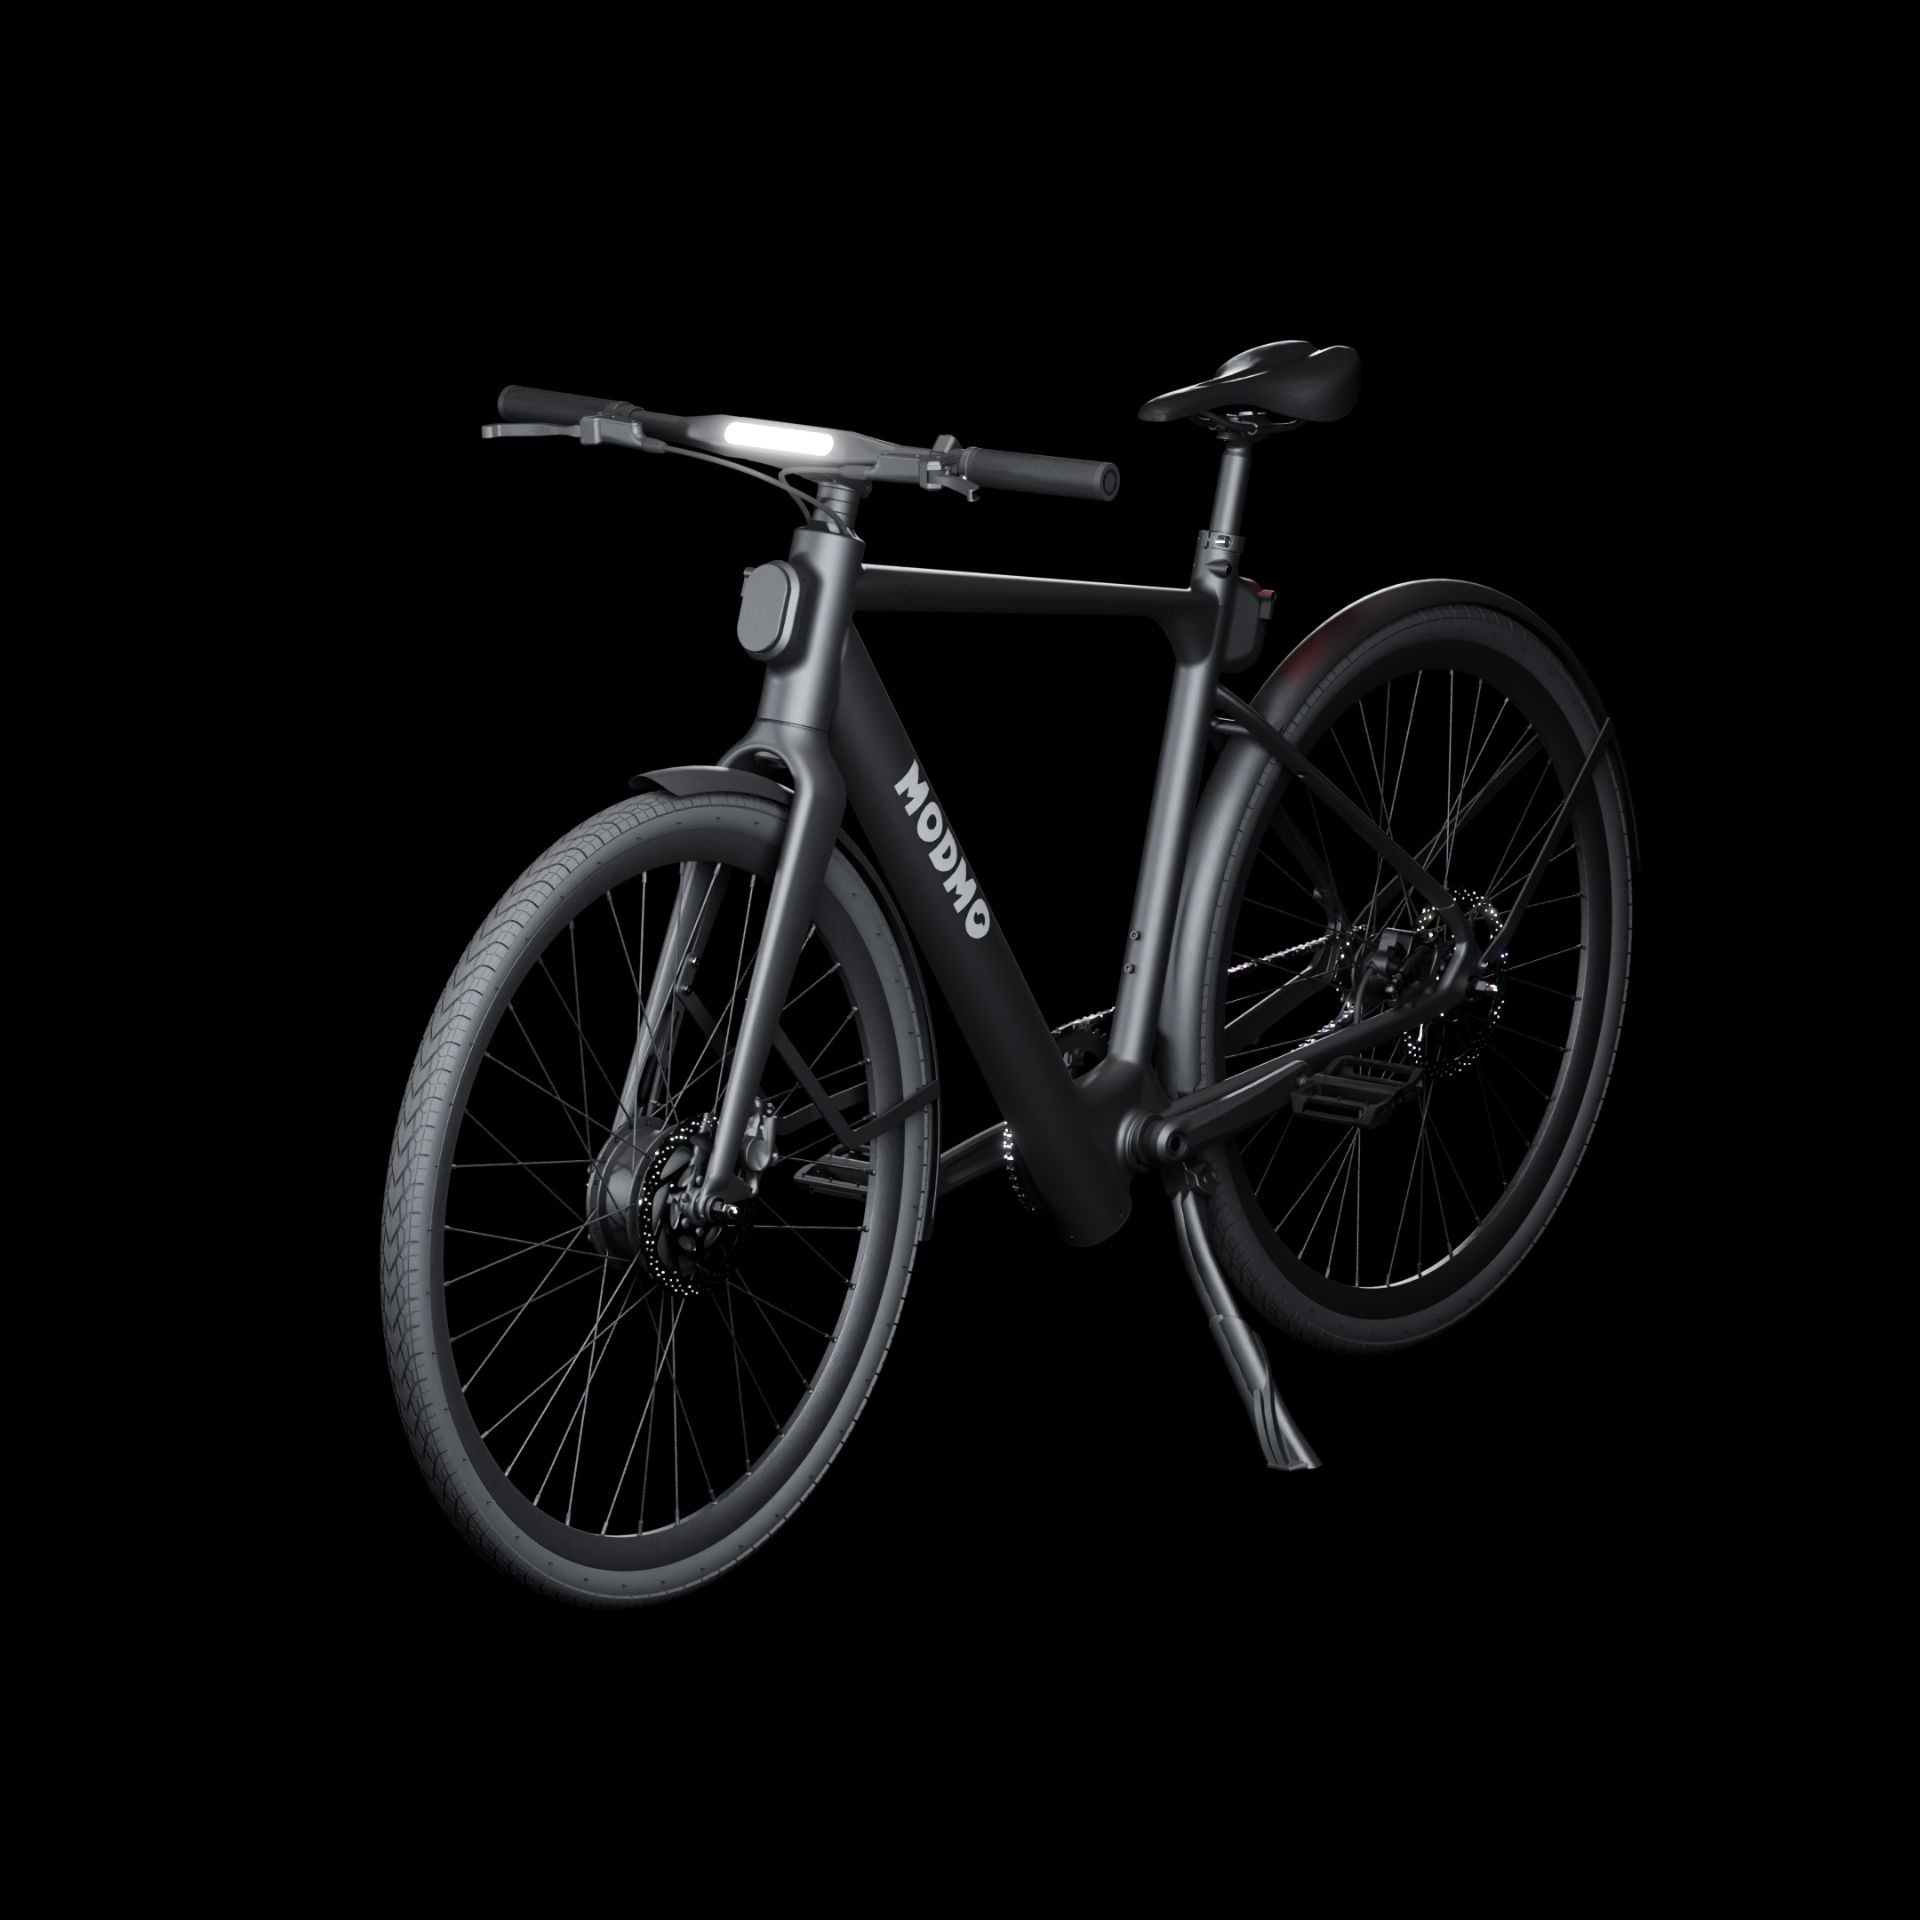 Modmo Saigon+ Electric Bicycle - RRP £2800 - Size L (Rider 175-190cm) - Image 2 of 22